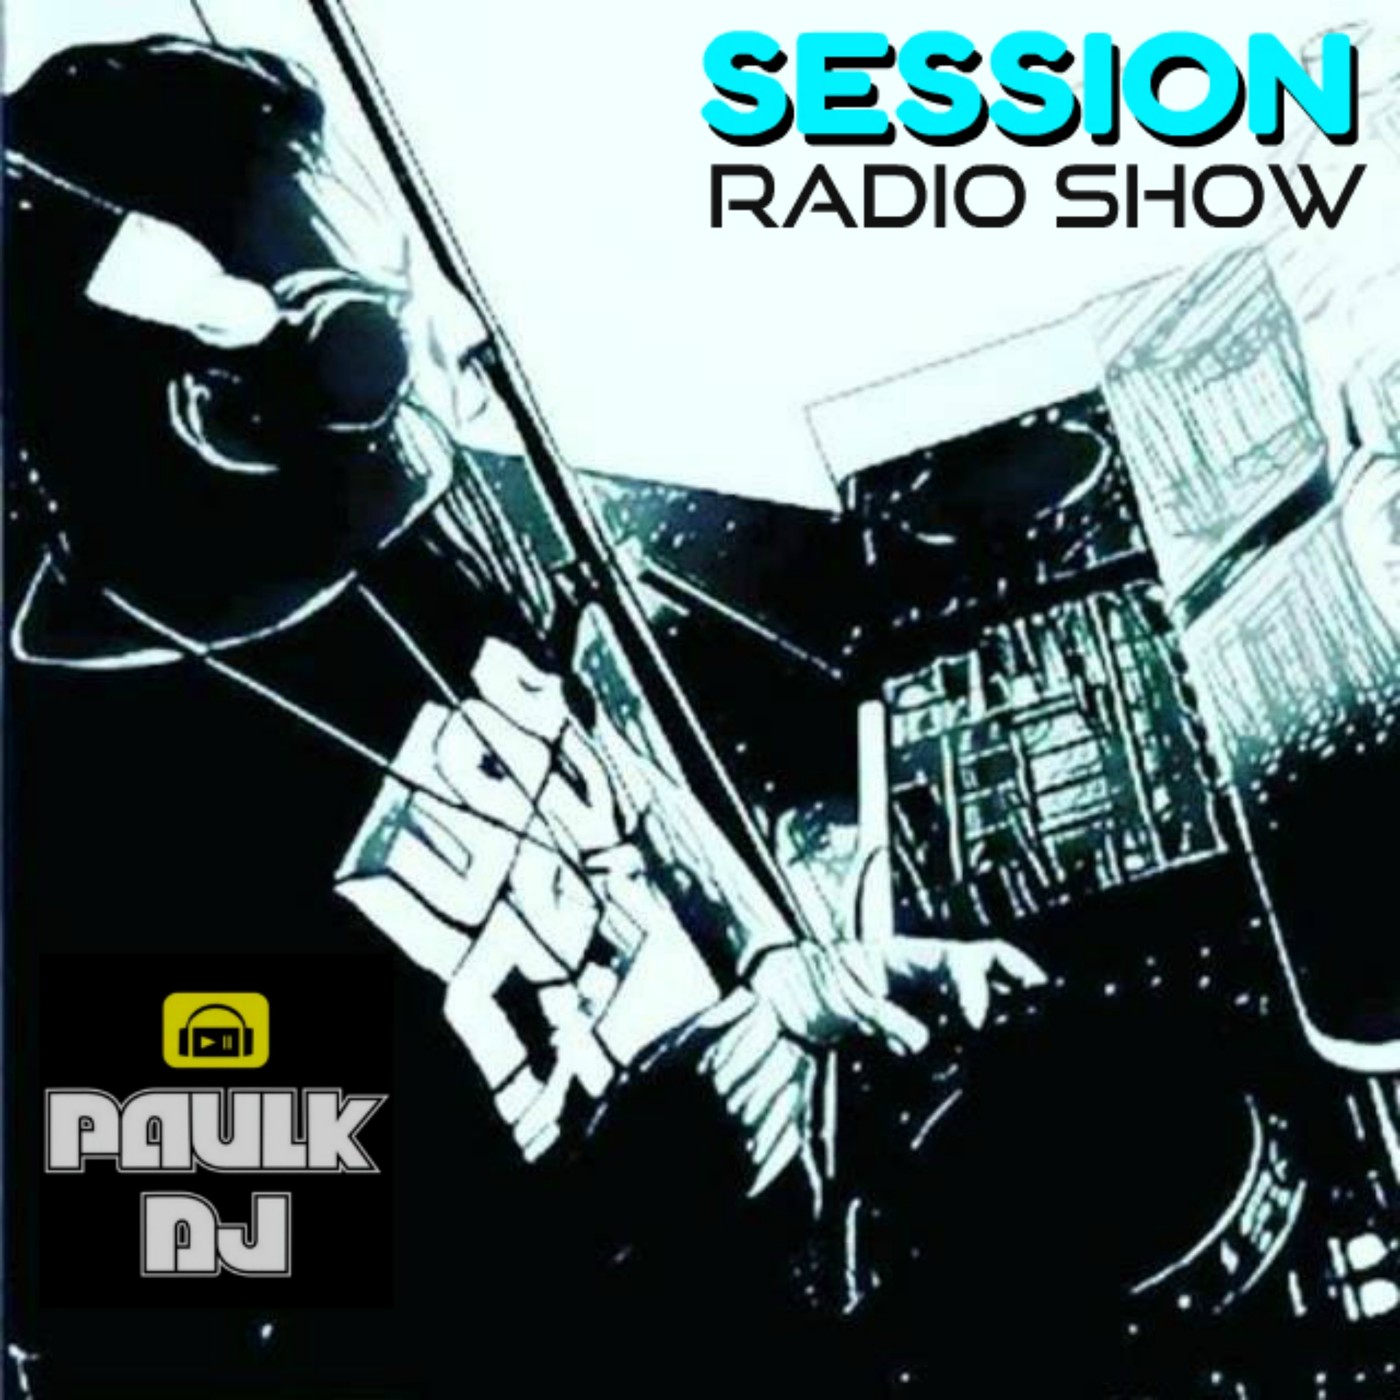 Paulk Dj - Session Radio Show